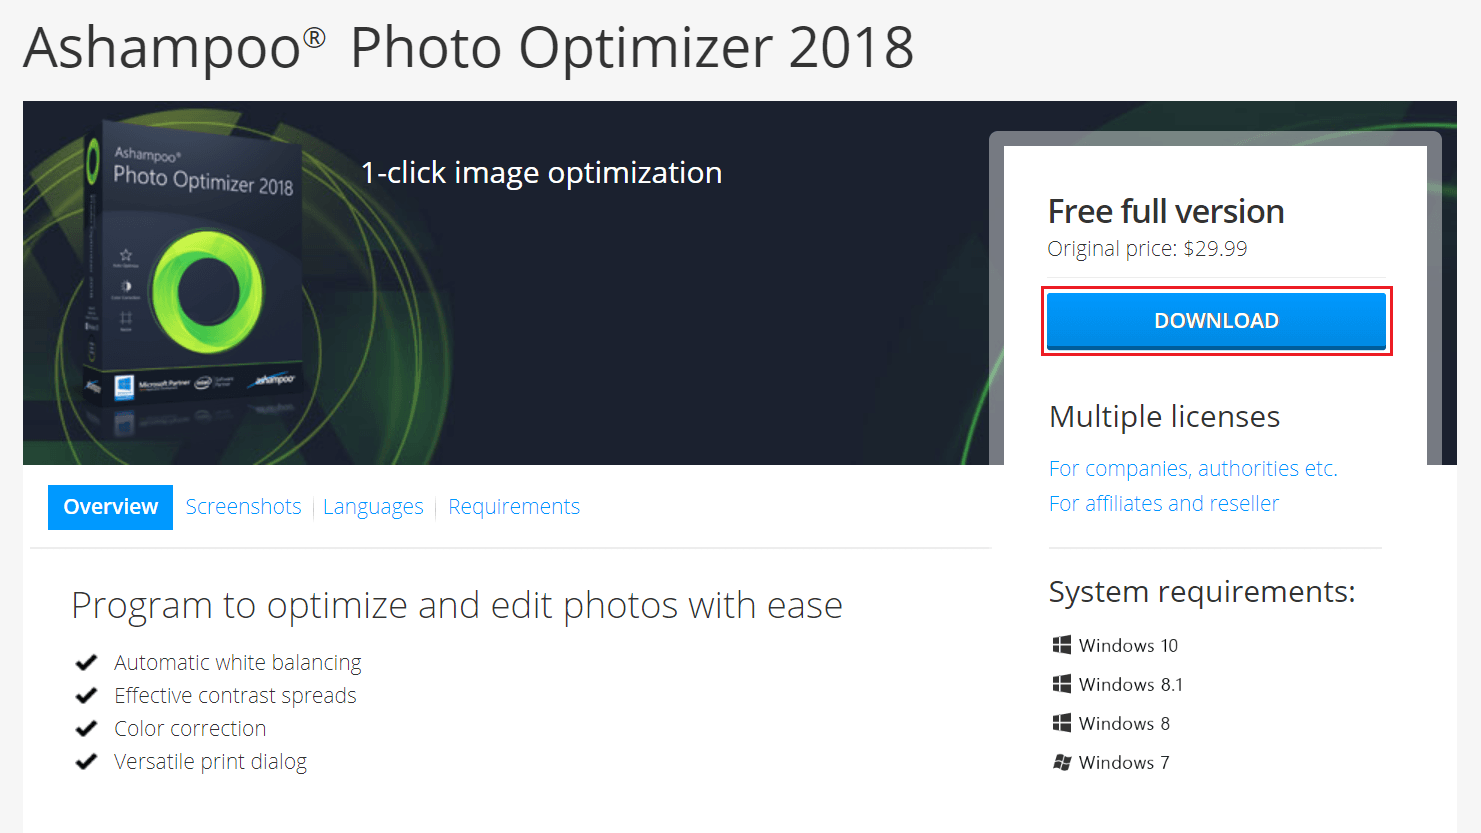 Image 001 - [免費] Ashampoo Photo Optimizer 2018 在電腦上一鍵美化你的照片，全自動超easy！